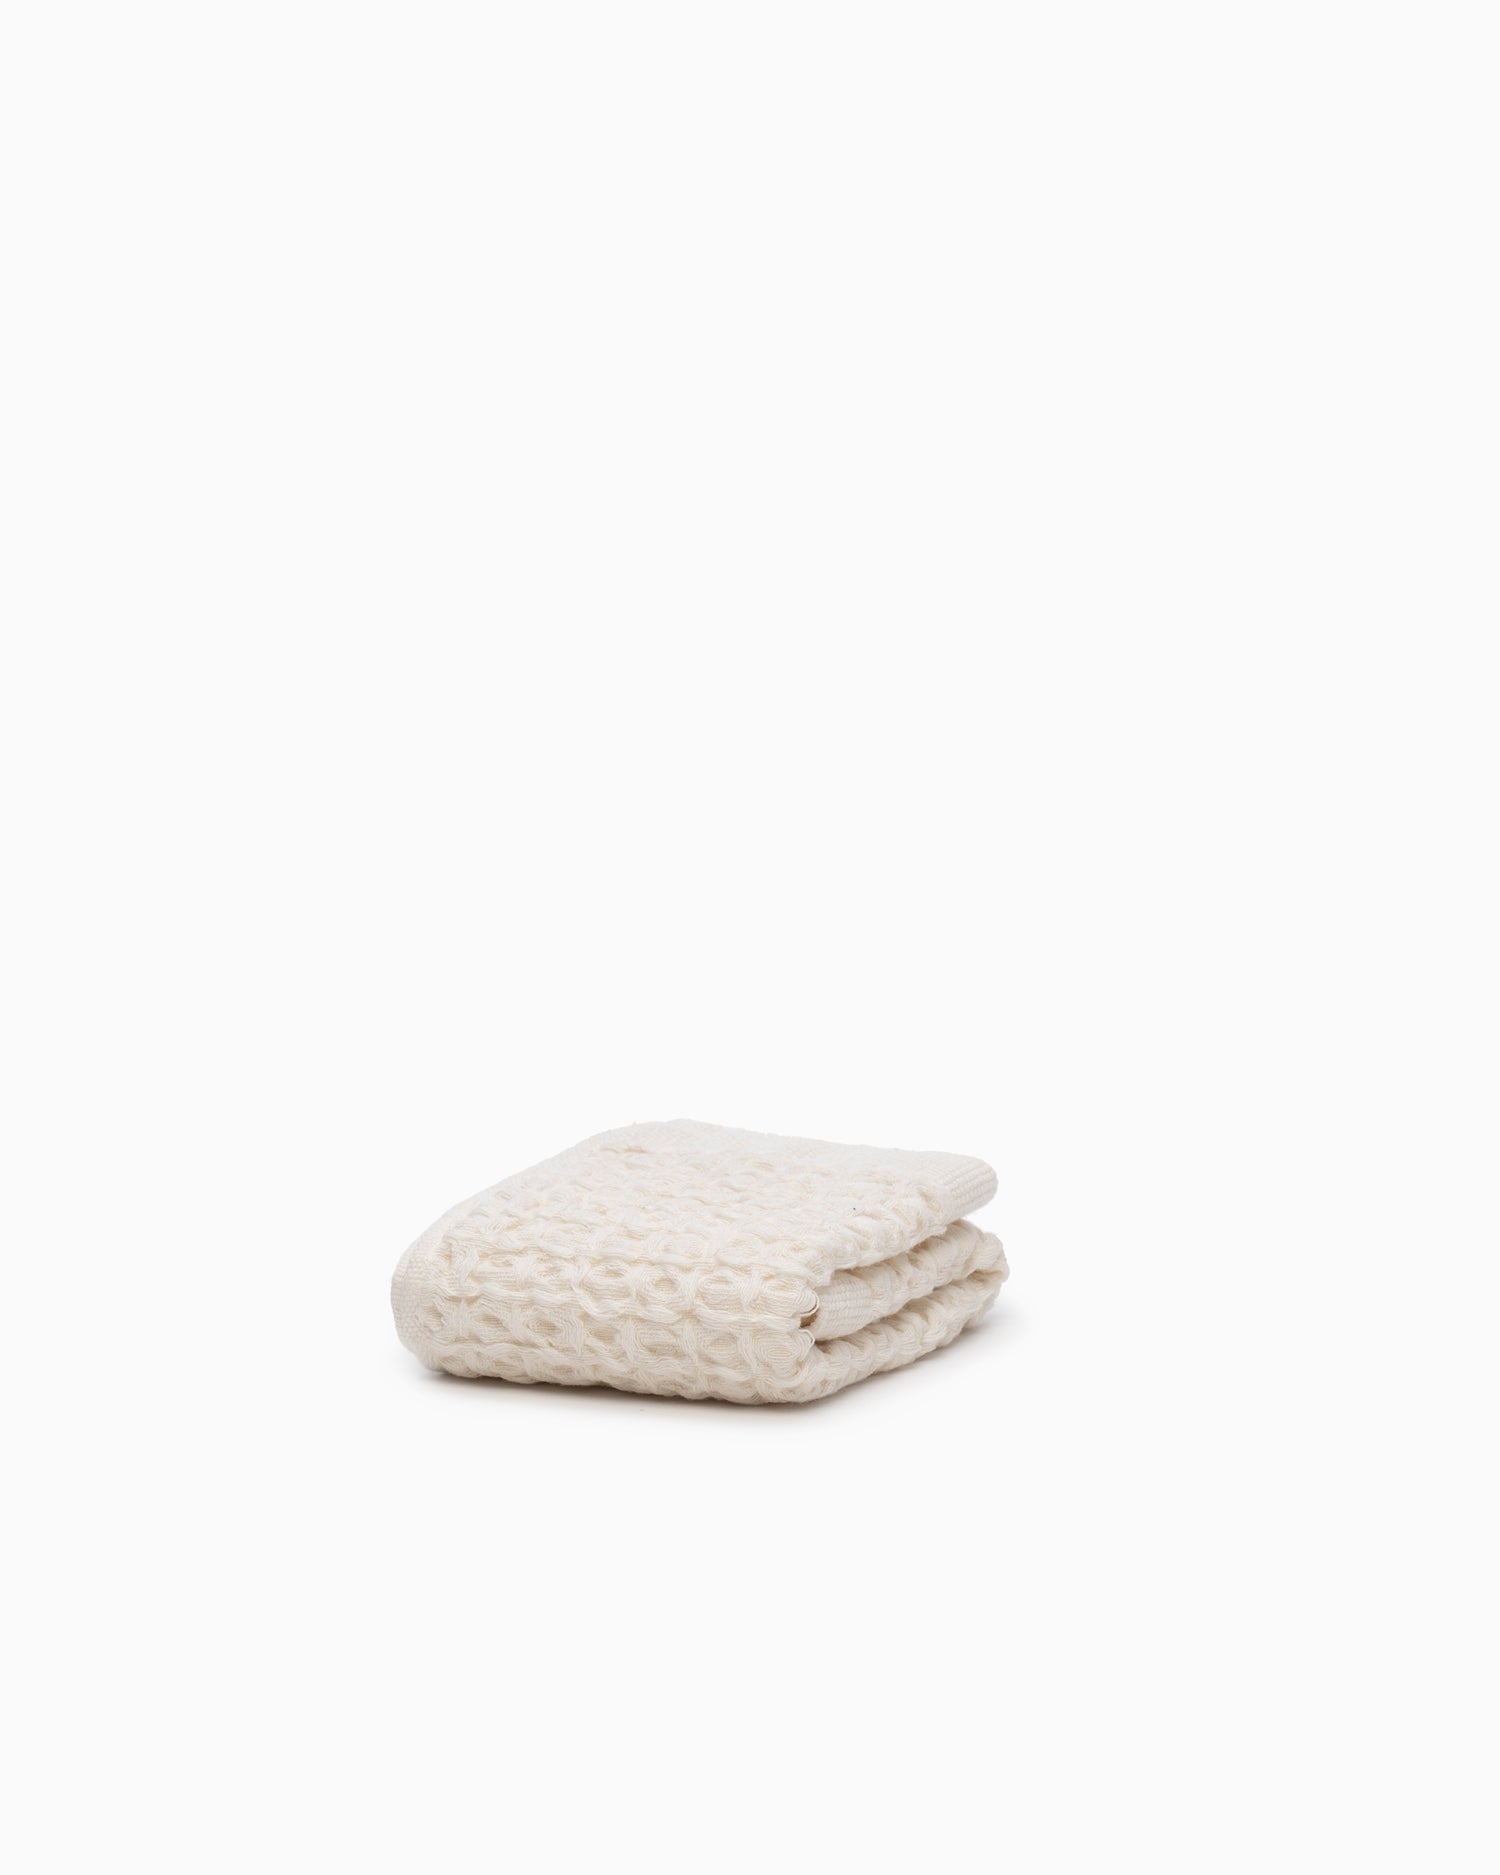 Lattice Linen Waffle Towel, Charcoal